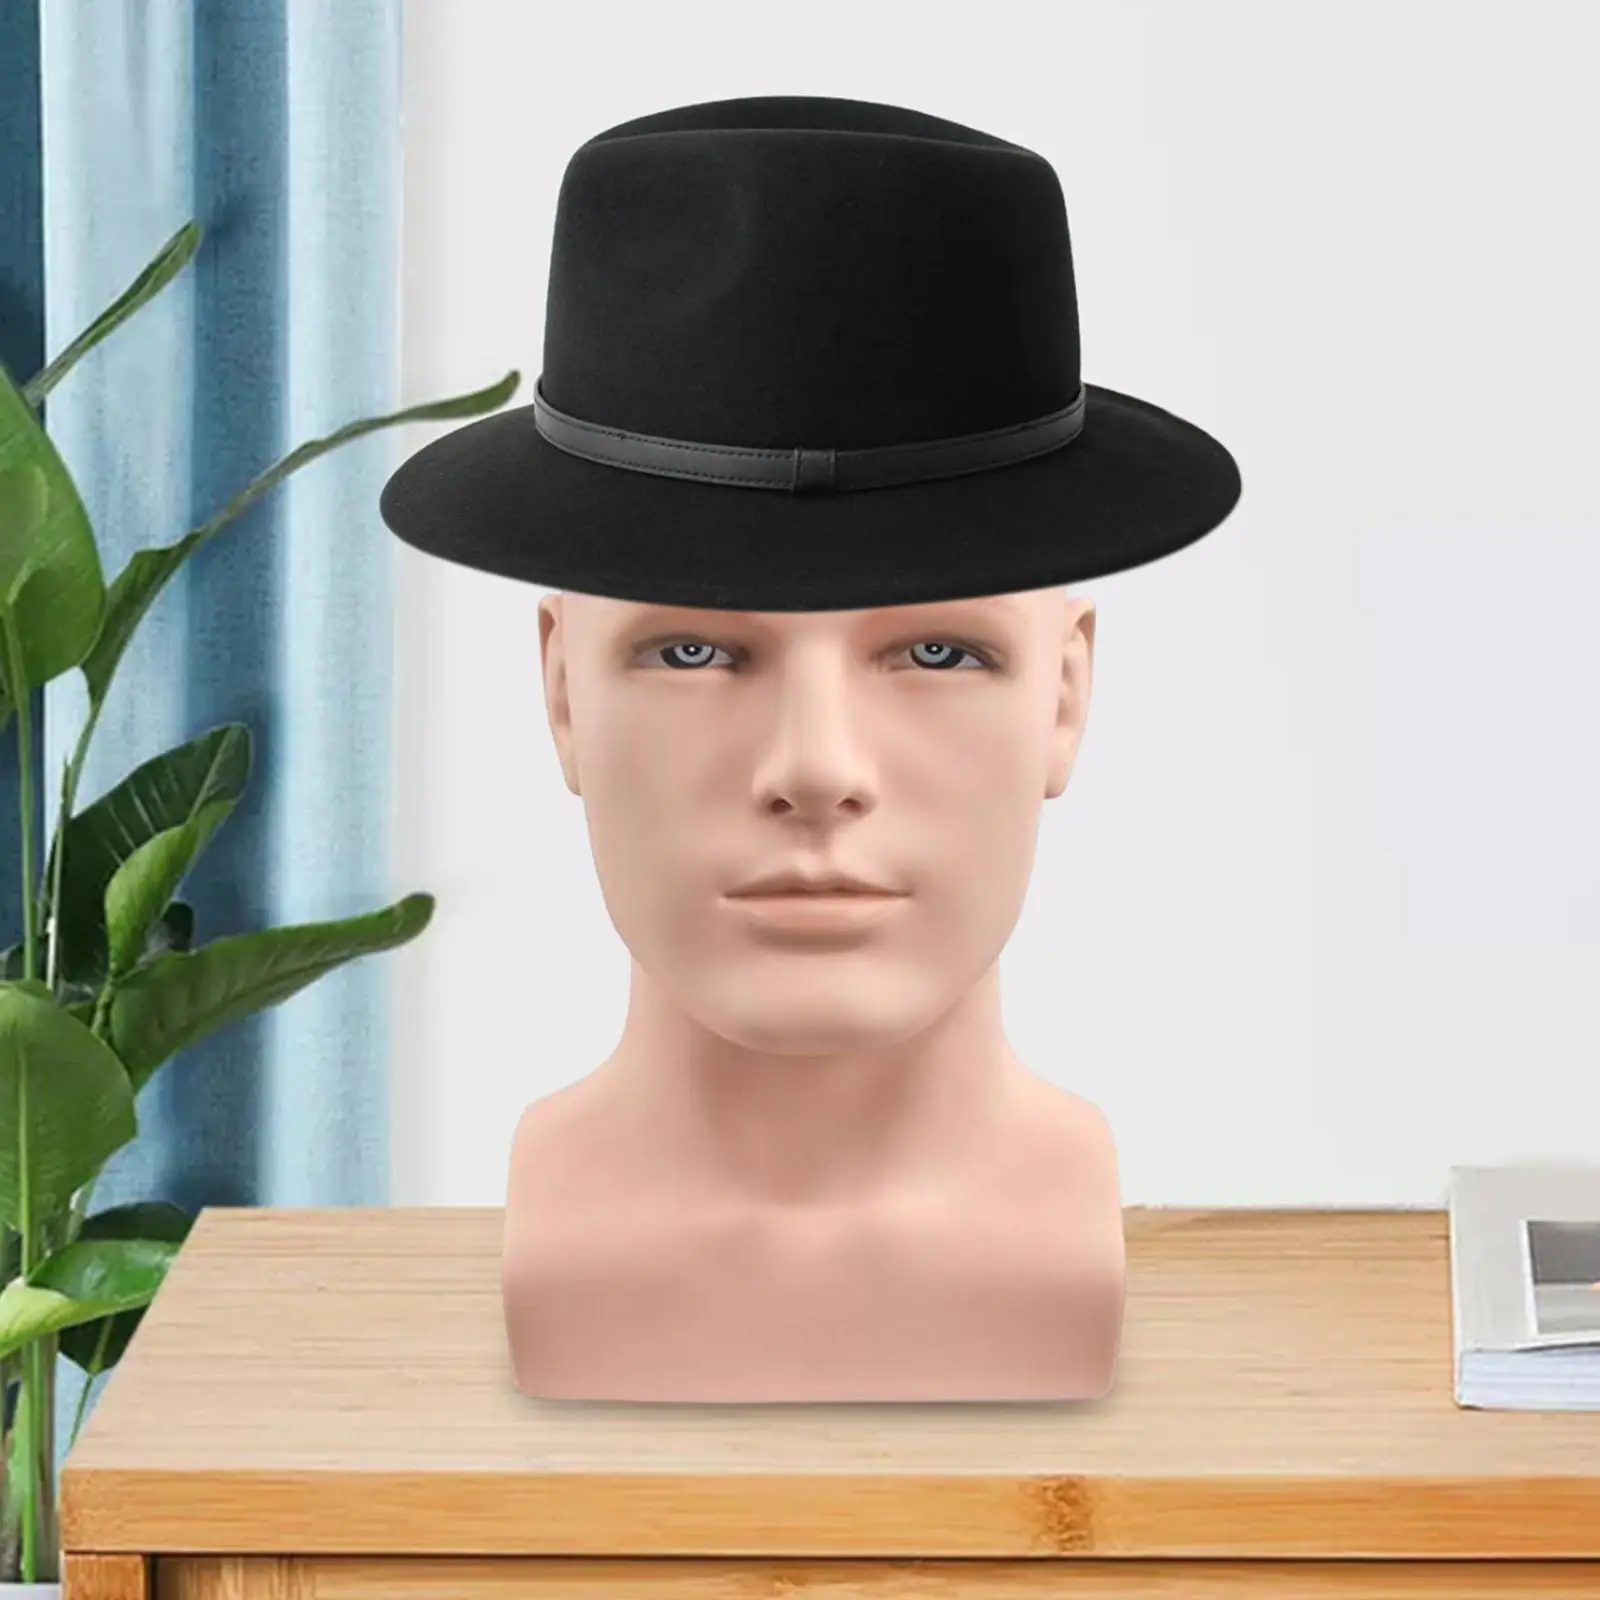 Man Mannequin Head Manikin Head Model Head Bust for Hat Headphone Necklace Chain